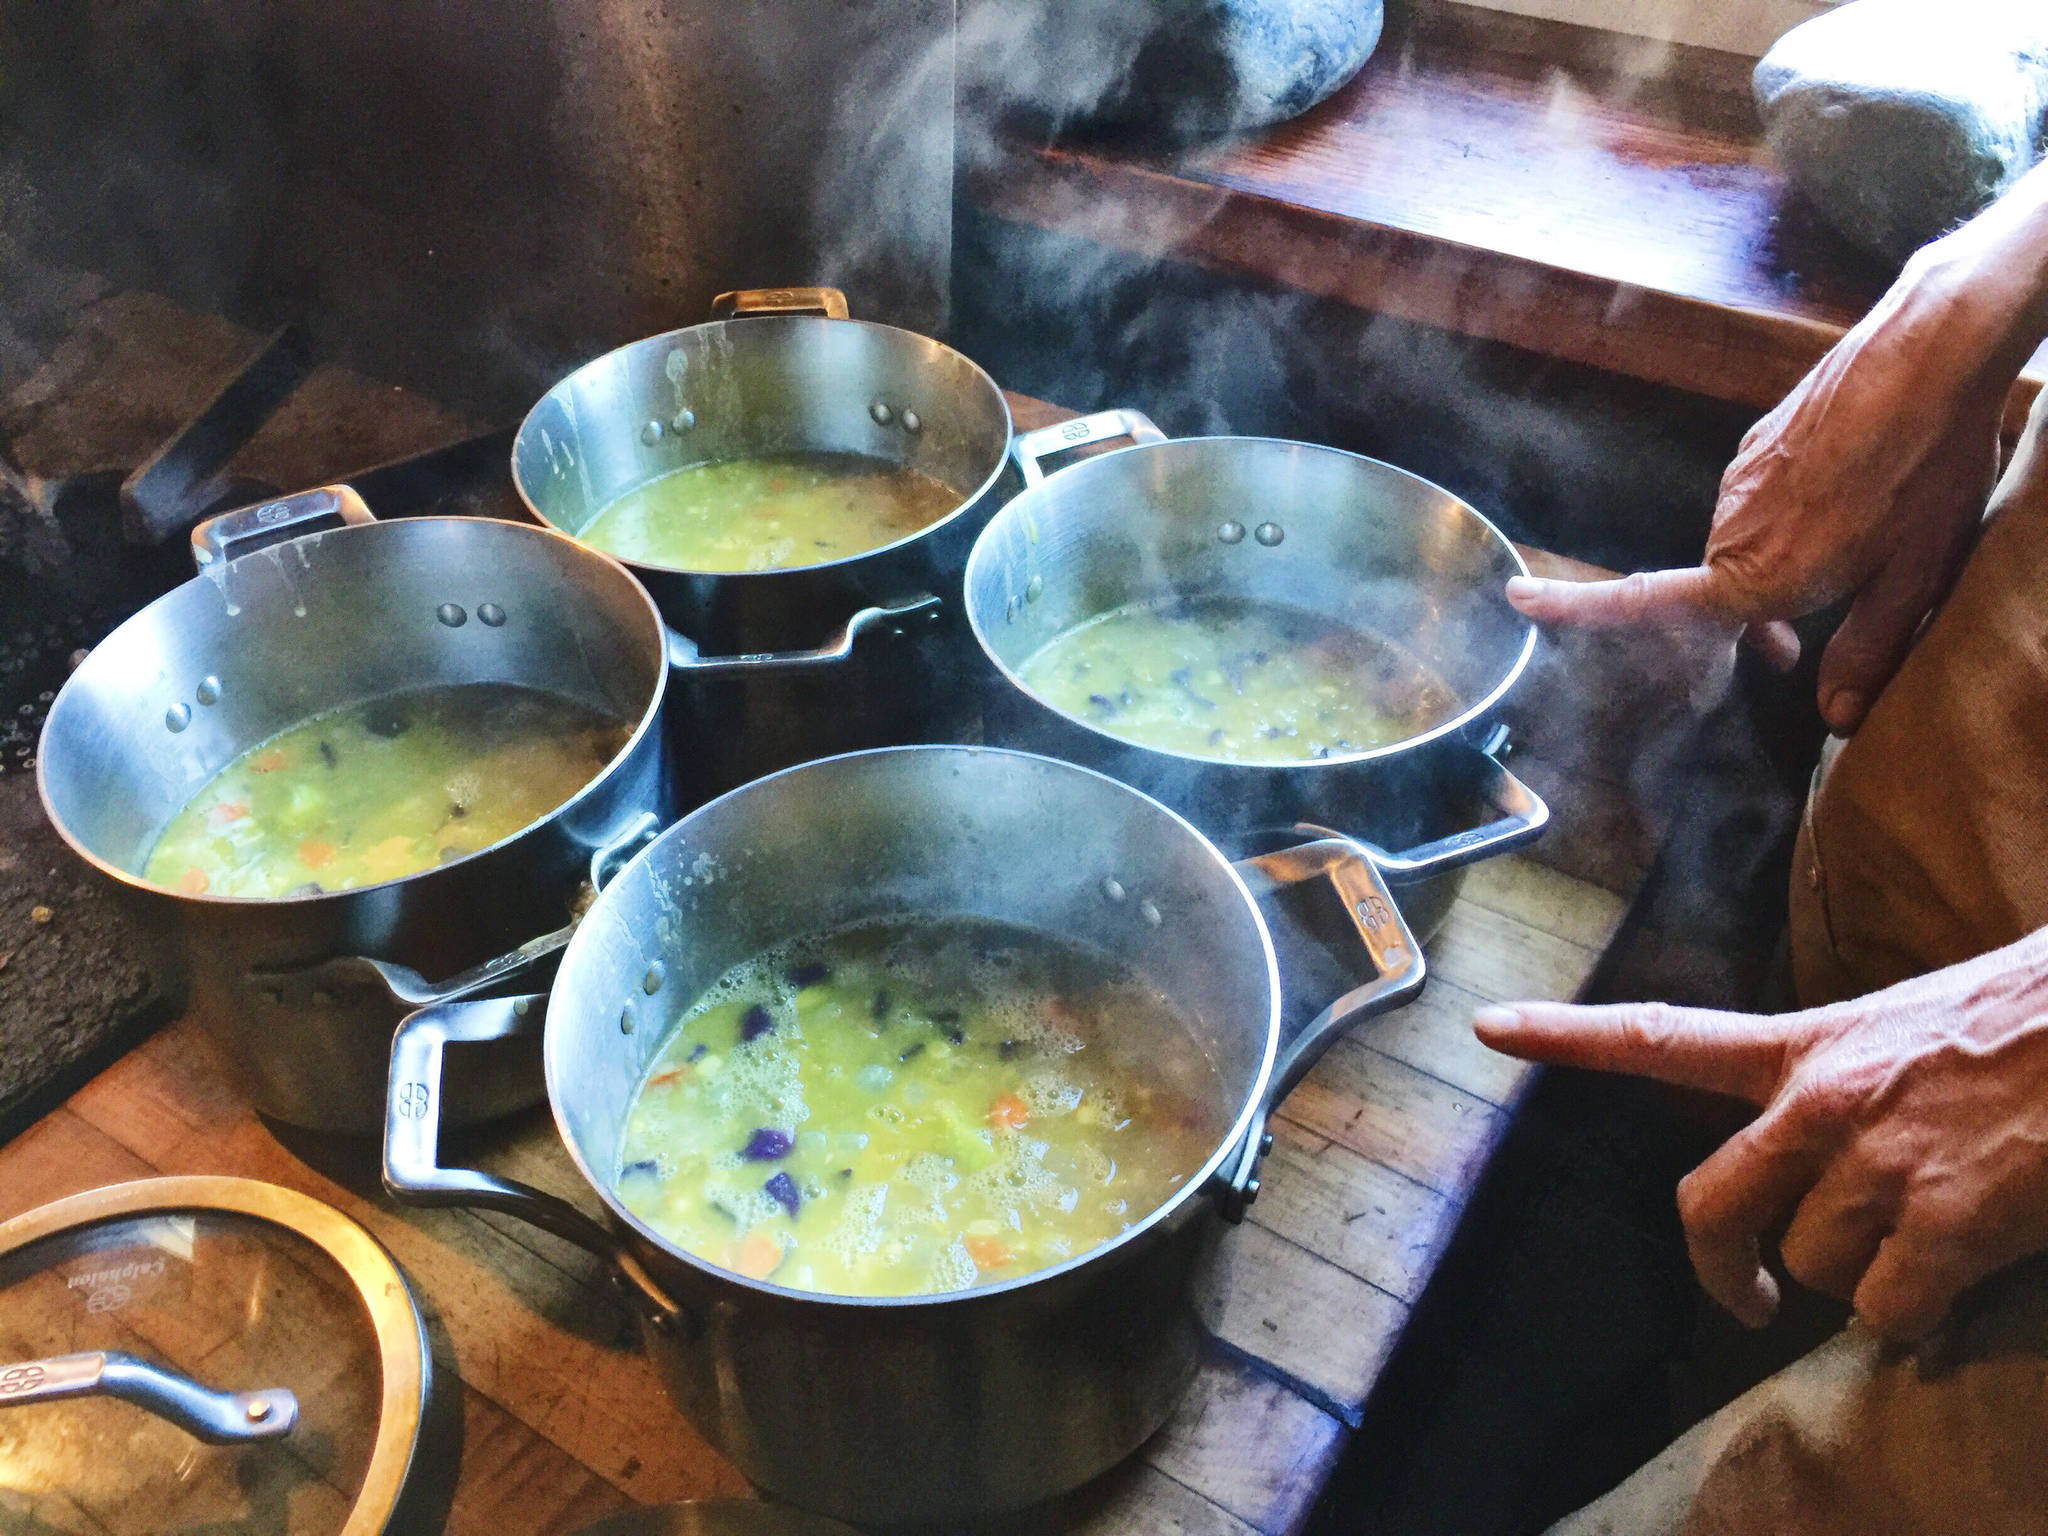 Split pea soup is ready to serve inside the Ionia Community Center kitchen on Tuesday, July 3, near Kasilof, Alaska. (Photo by Victoria Petersen/Peninsula Clarion)